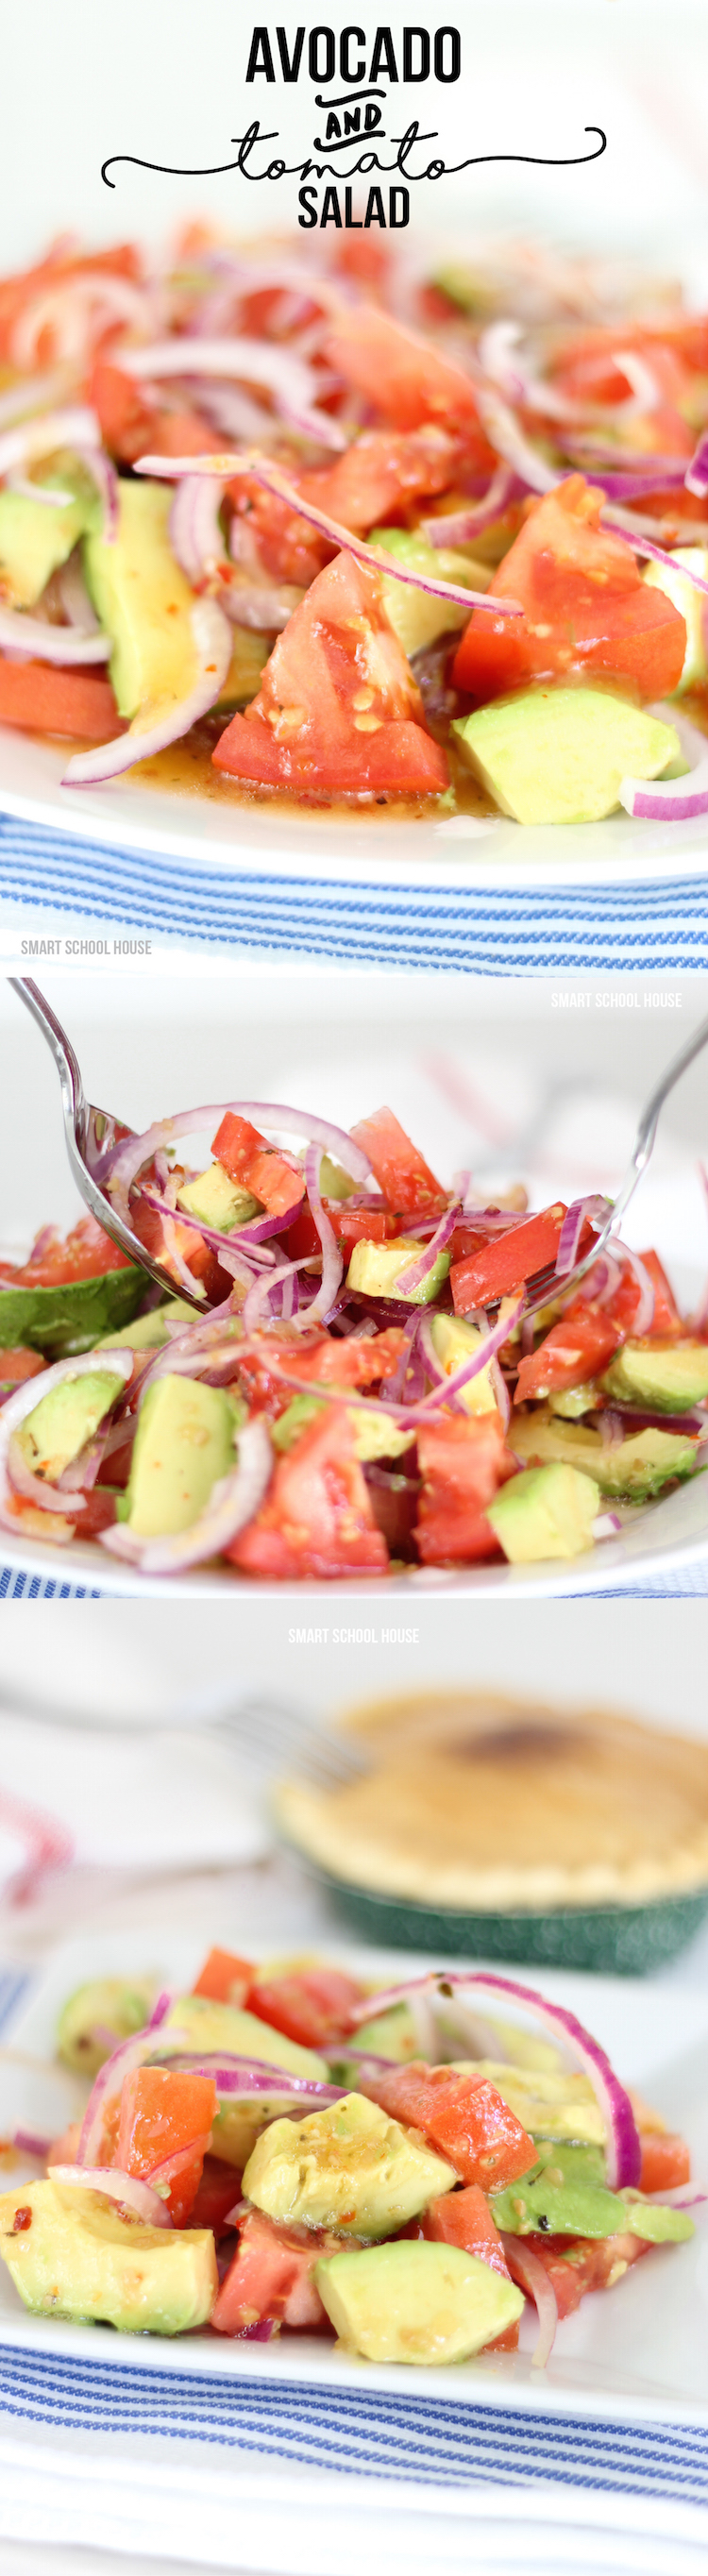 Avocado and Tomato Salad recipe - easy and delicious!